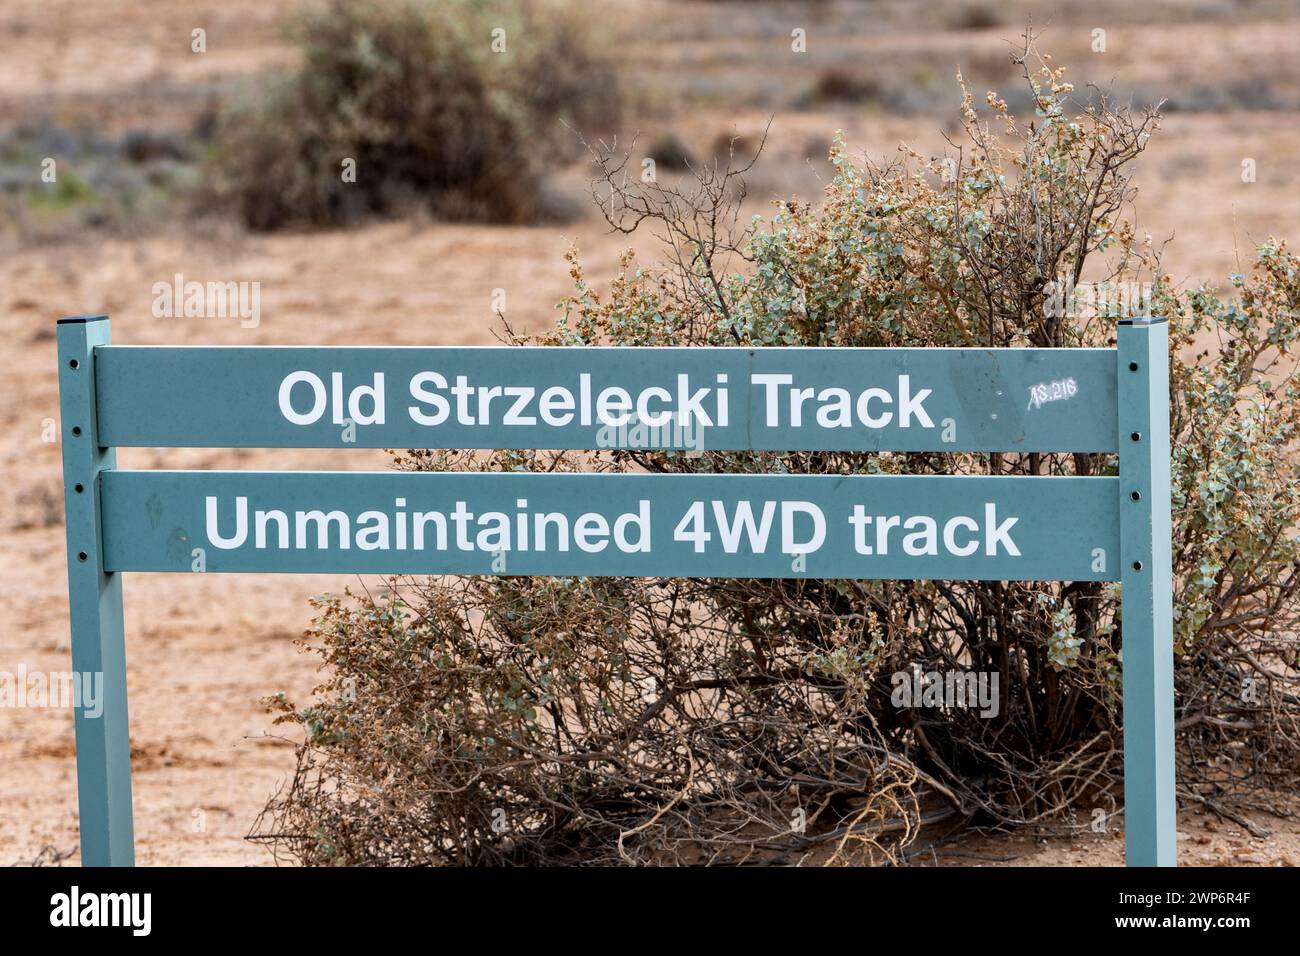 Name sign for the old Strzelecki Track, South Australia, SA, Australia Stock Photo